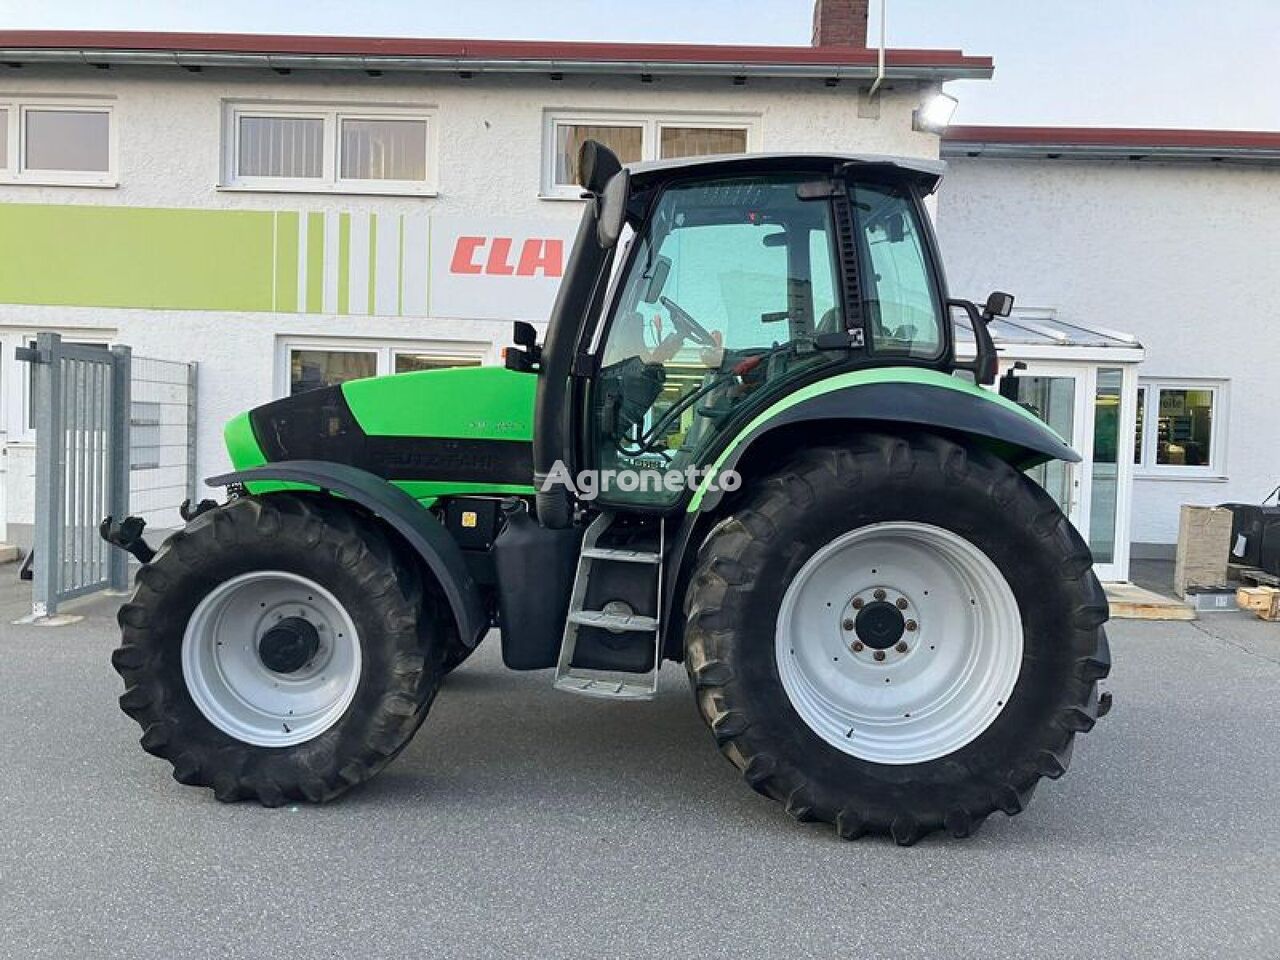 Deutz-Fahr M620 traktor na kotačima